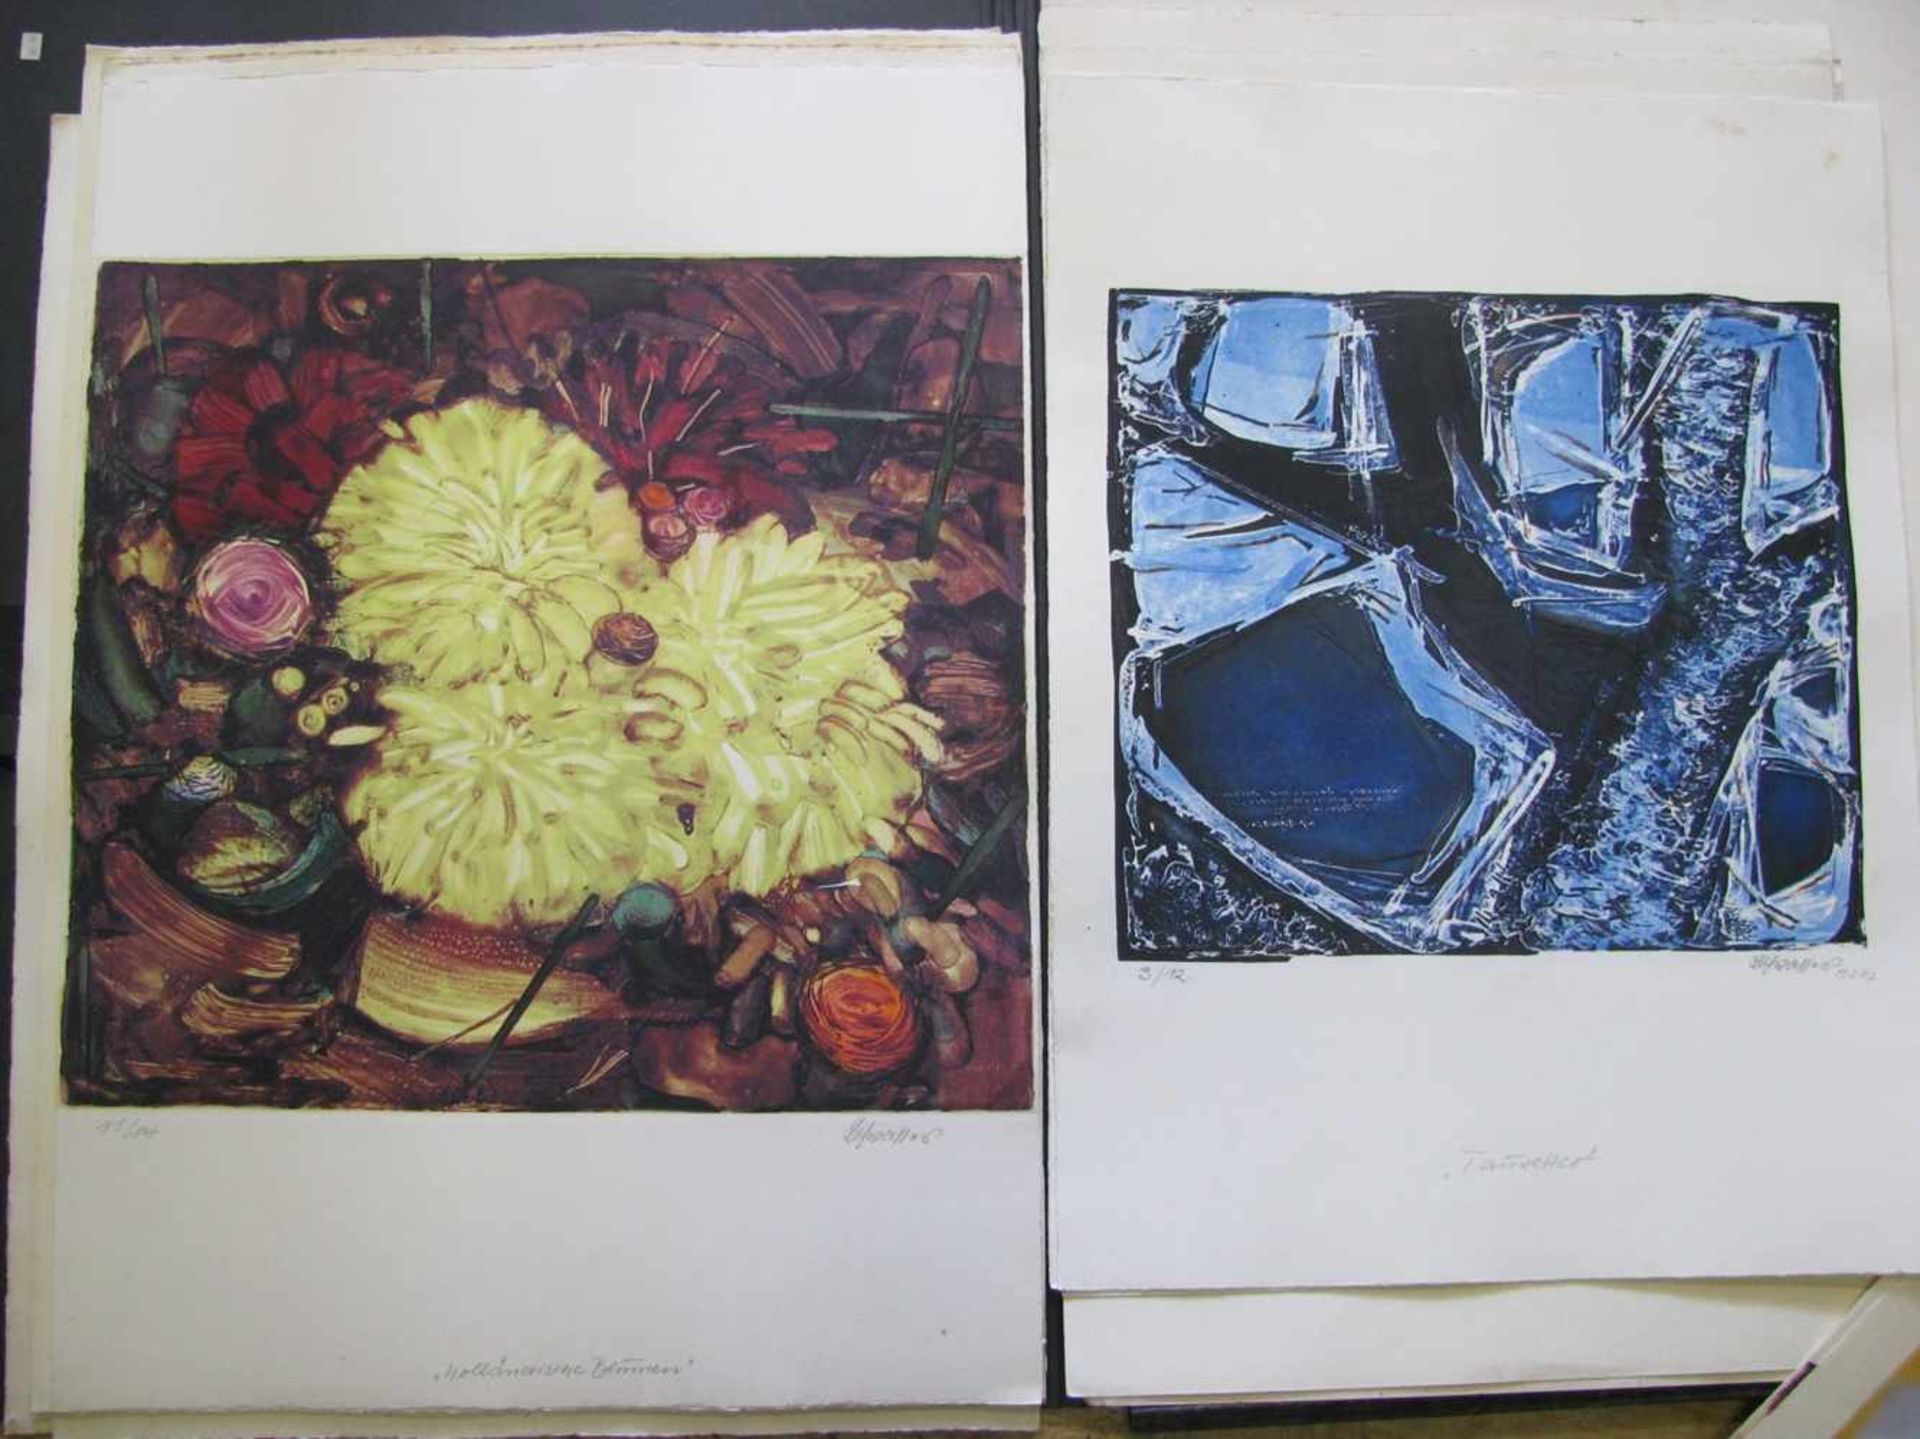 Lohwasser, Kurt Paul, 1922 - 1999, Karlsbad, Maler und Grafiker, Konvolut diverser Grafiken. - Image 3 of 5